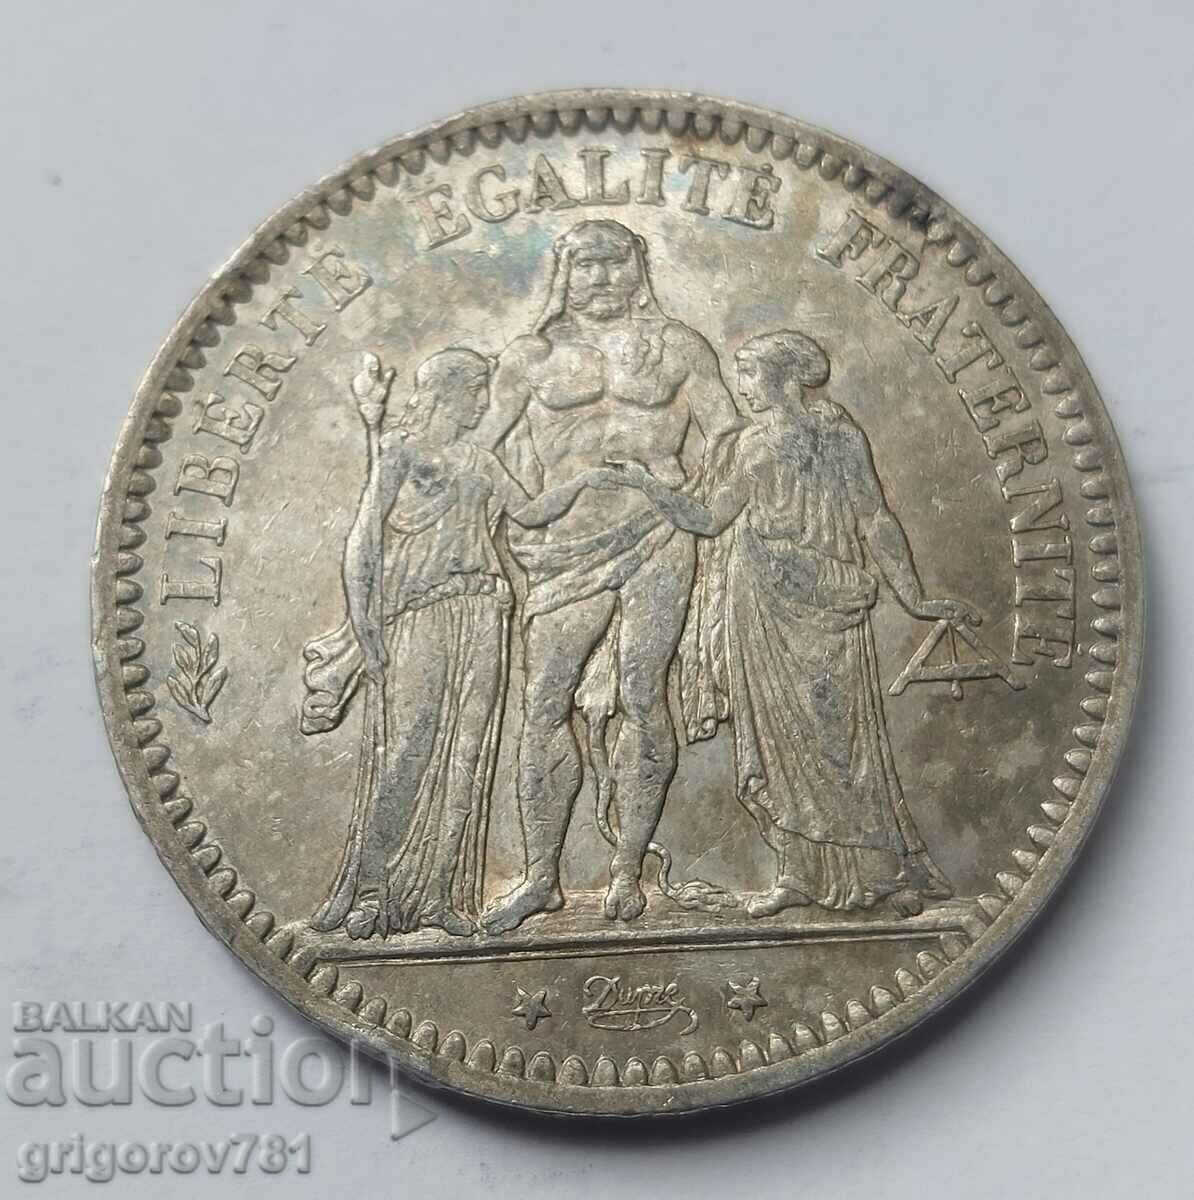 5 Francs Silver France 1873 A Silver Coin #143